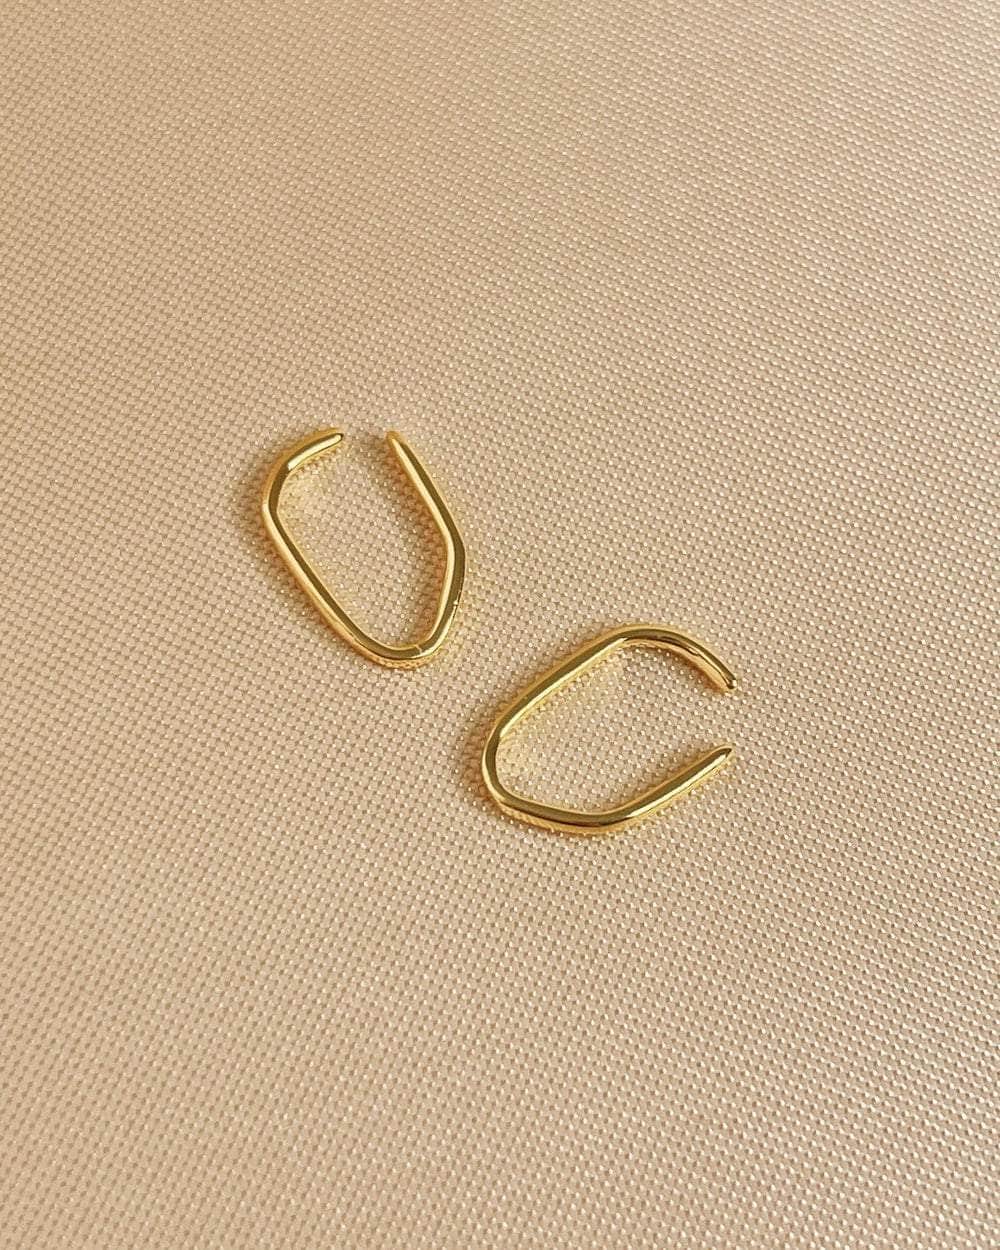 So Dainty Co. Ear Cuffs Caroline Gold Cuffs Gold Plated 925 Sterling Silver Jewelry